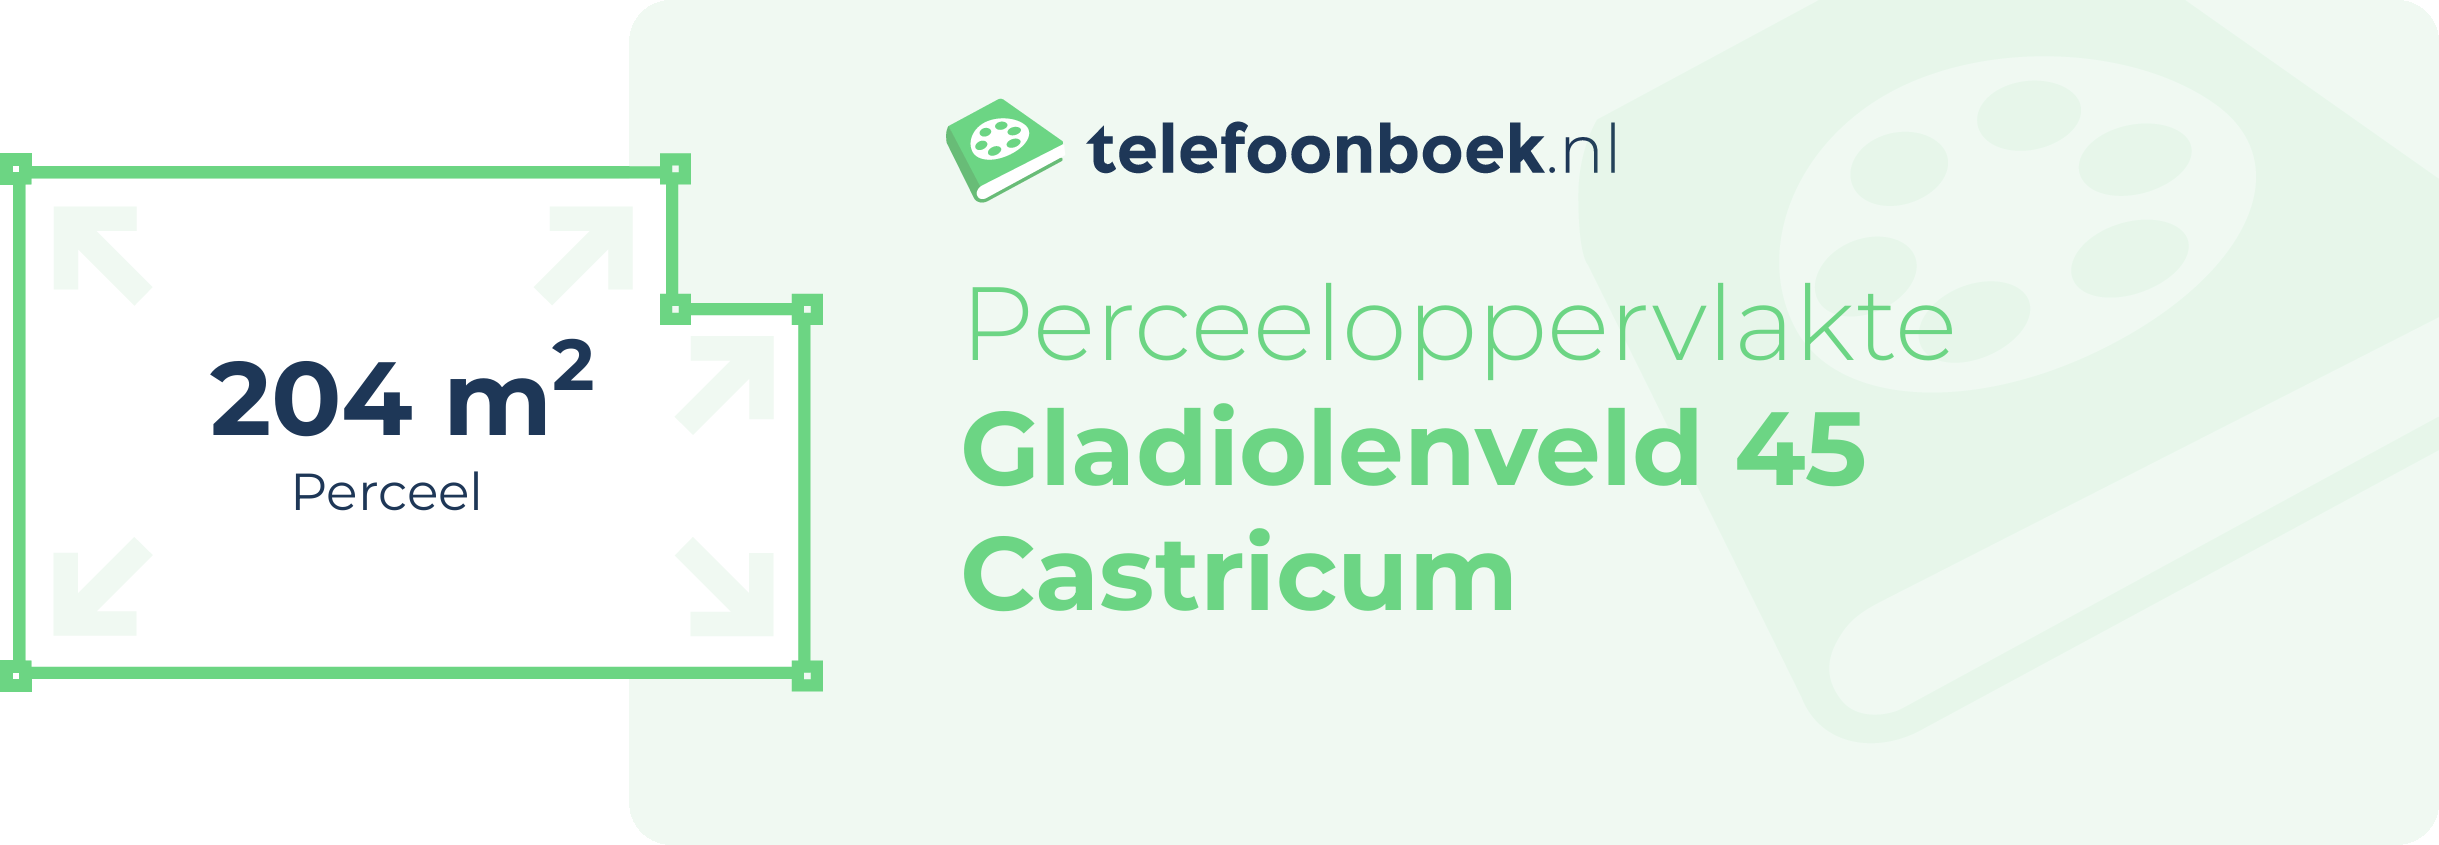 Perceeloppervlakte Gladiolenveld 45 Castricum